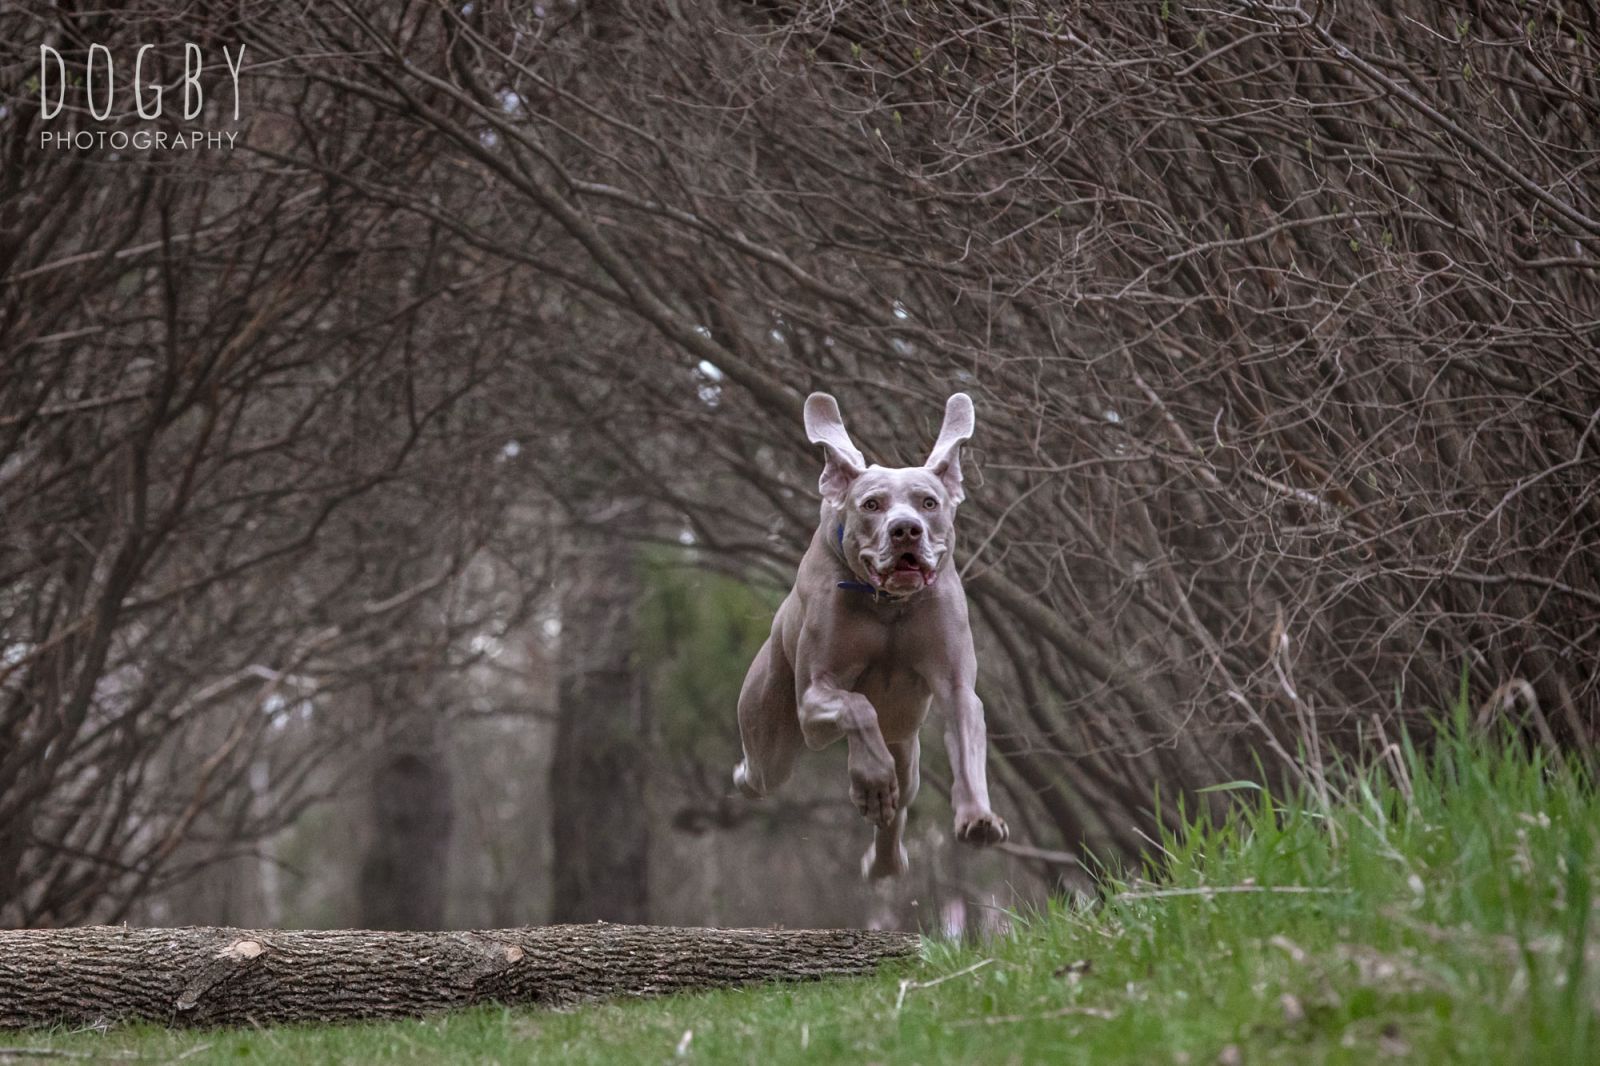 Dog running over a log